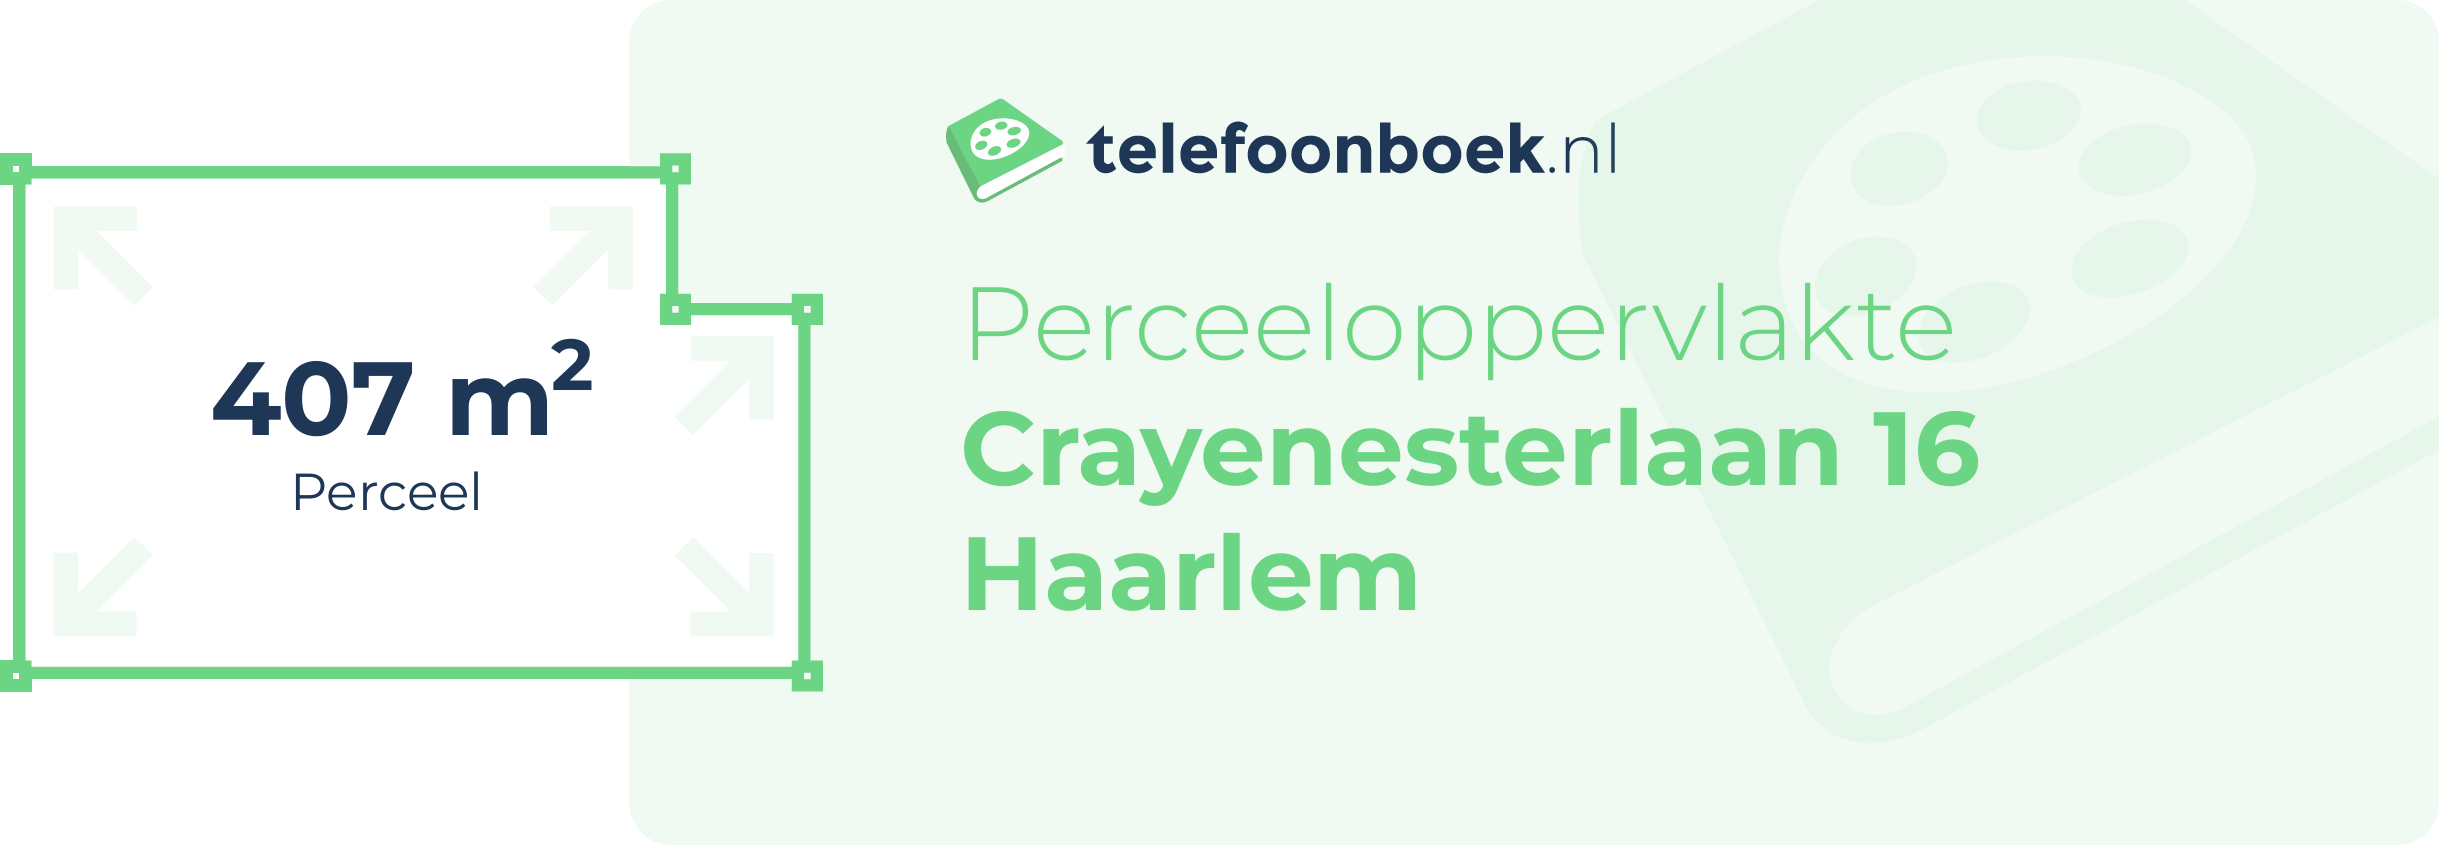 Perceeloppervlakte Crayenesterlaan 16 Haarlem